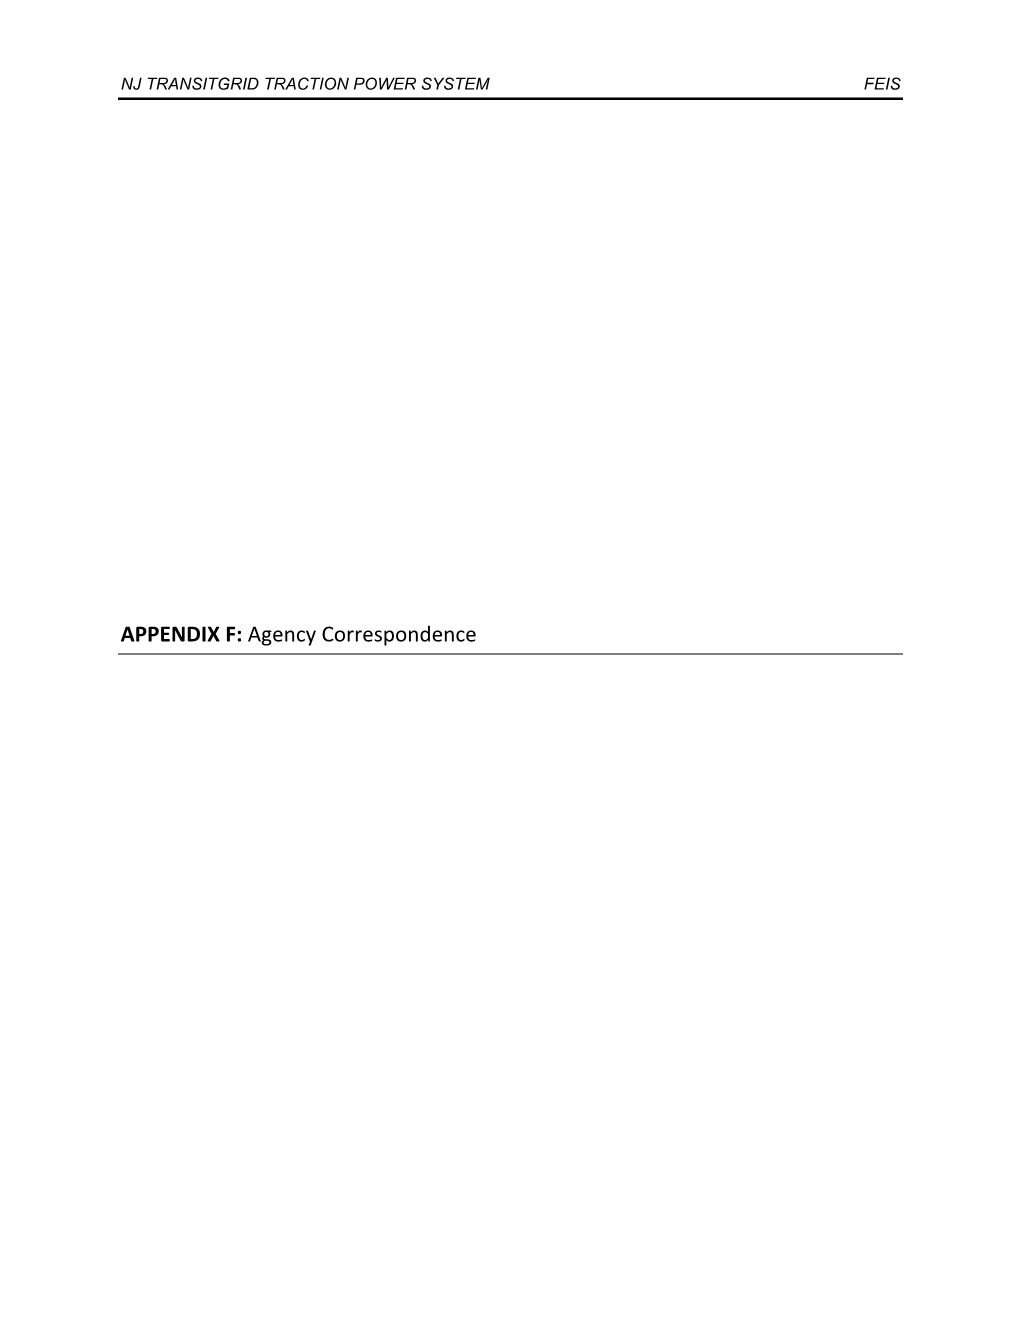 APPENDIX F: Agency Correspondence NJ TRANSITGRID TRACTION POWER SYSTEM Appendix F – Agency Correspondence